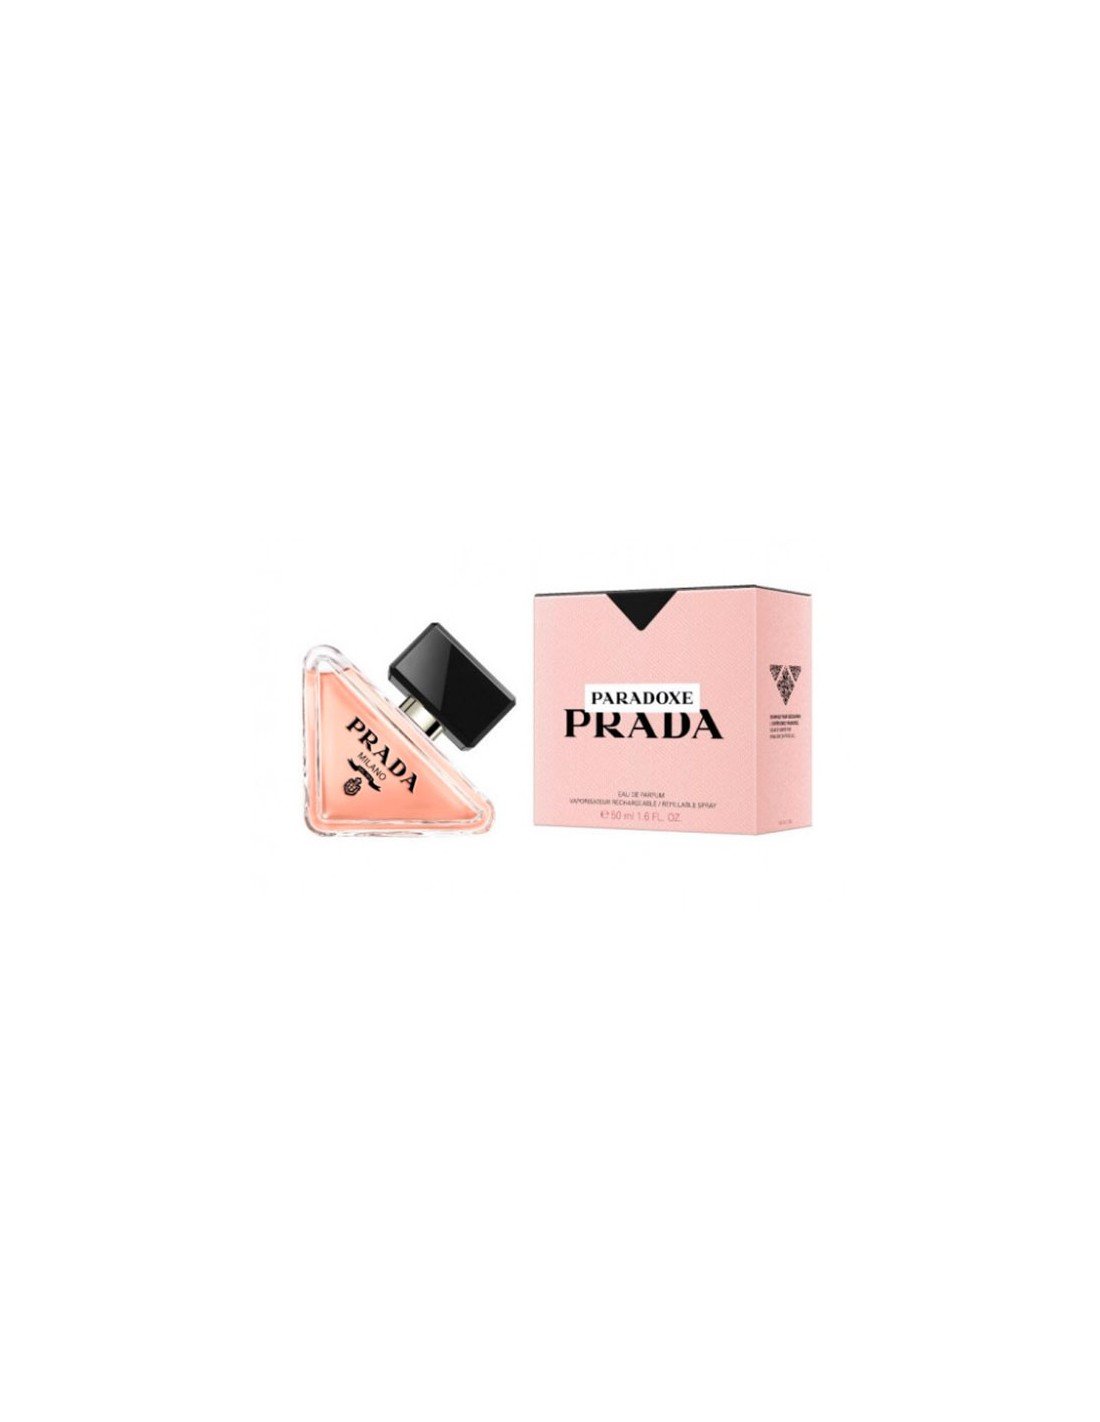 Prada Paradoxe Eau de Parfum, ricaricabile, spray 50ML - Profumo Web